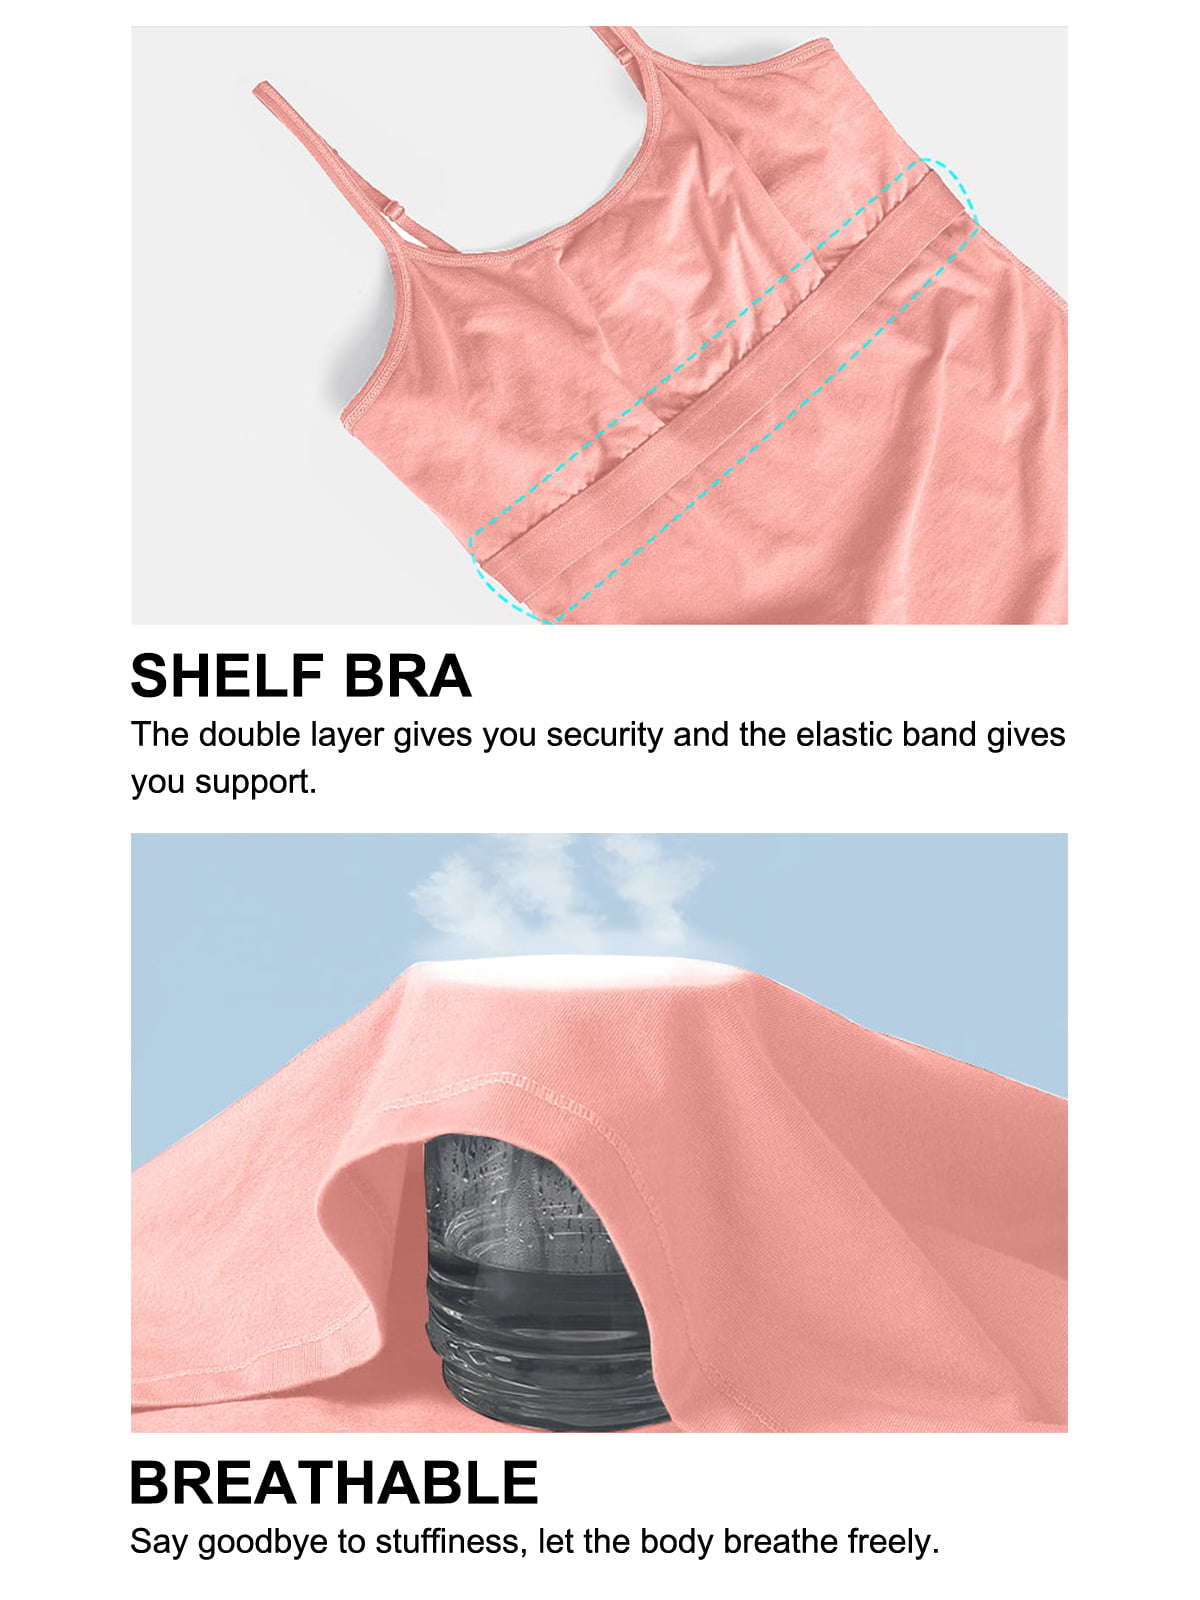 xkwyshop Womens Camisole with Shelf Bra Cotton Undershirts Adjustable Strap  Cami Spaghetti Strap Tank Tops Pink L 